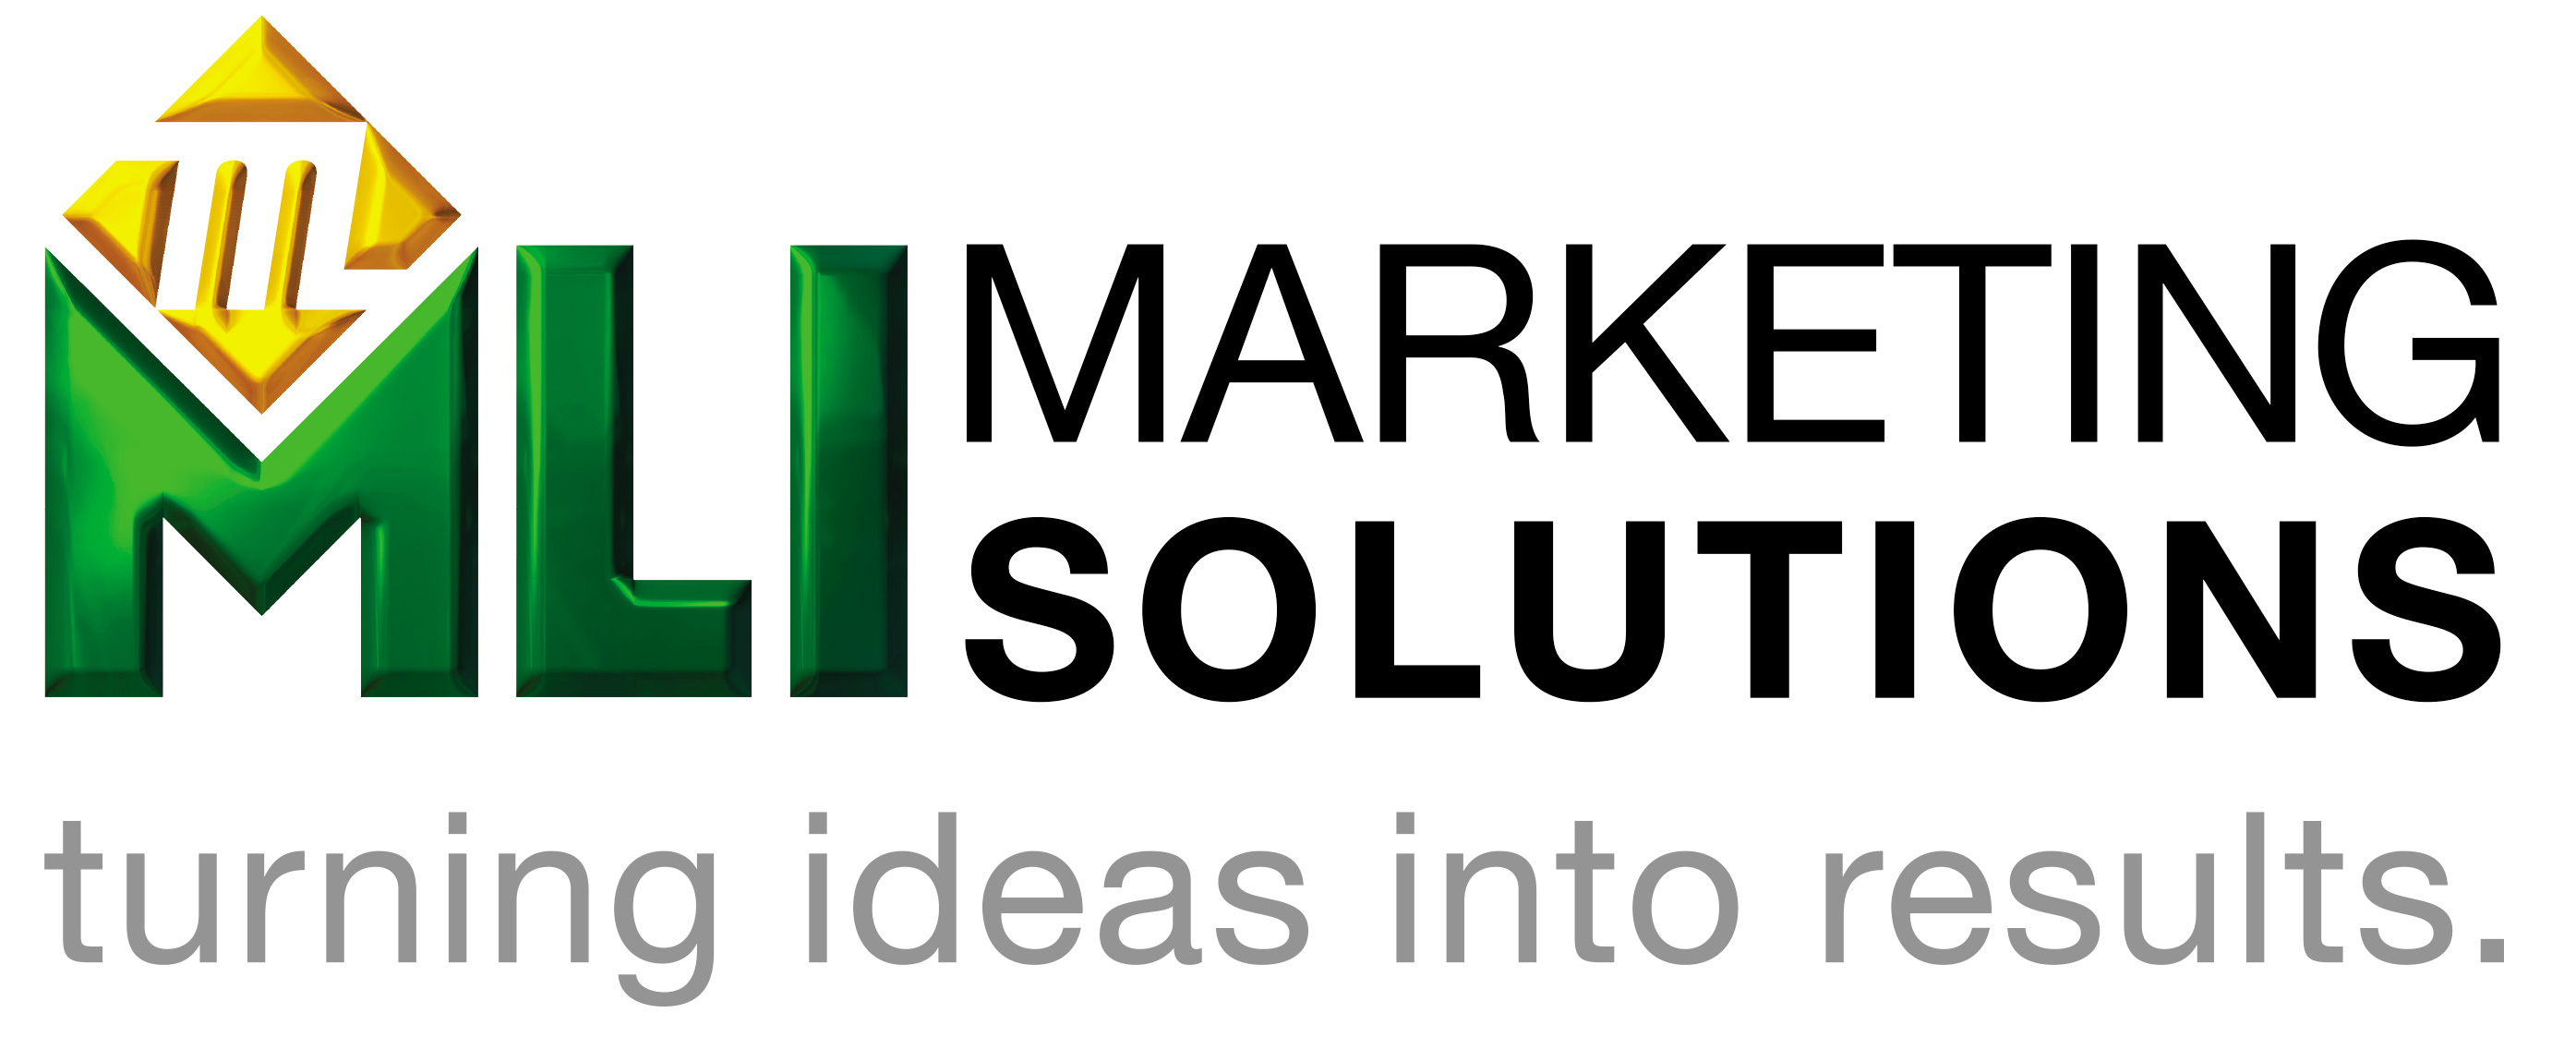 MLI Marketing Solutions